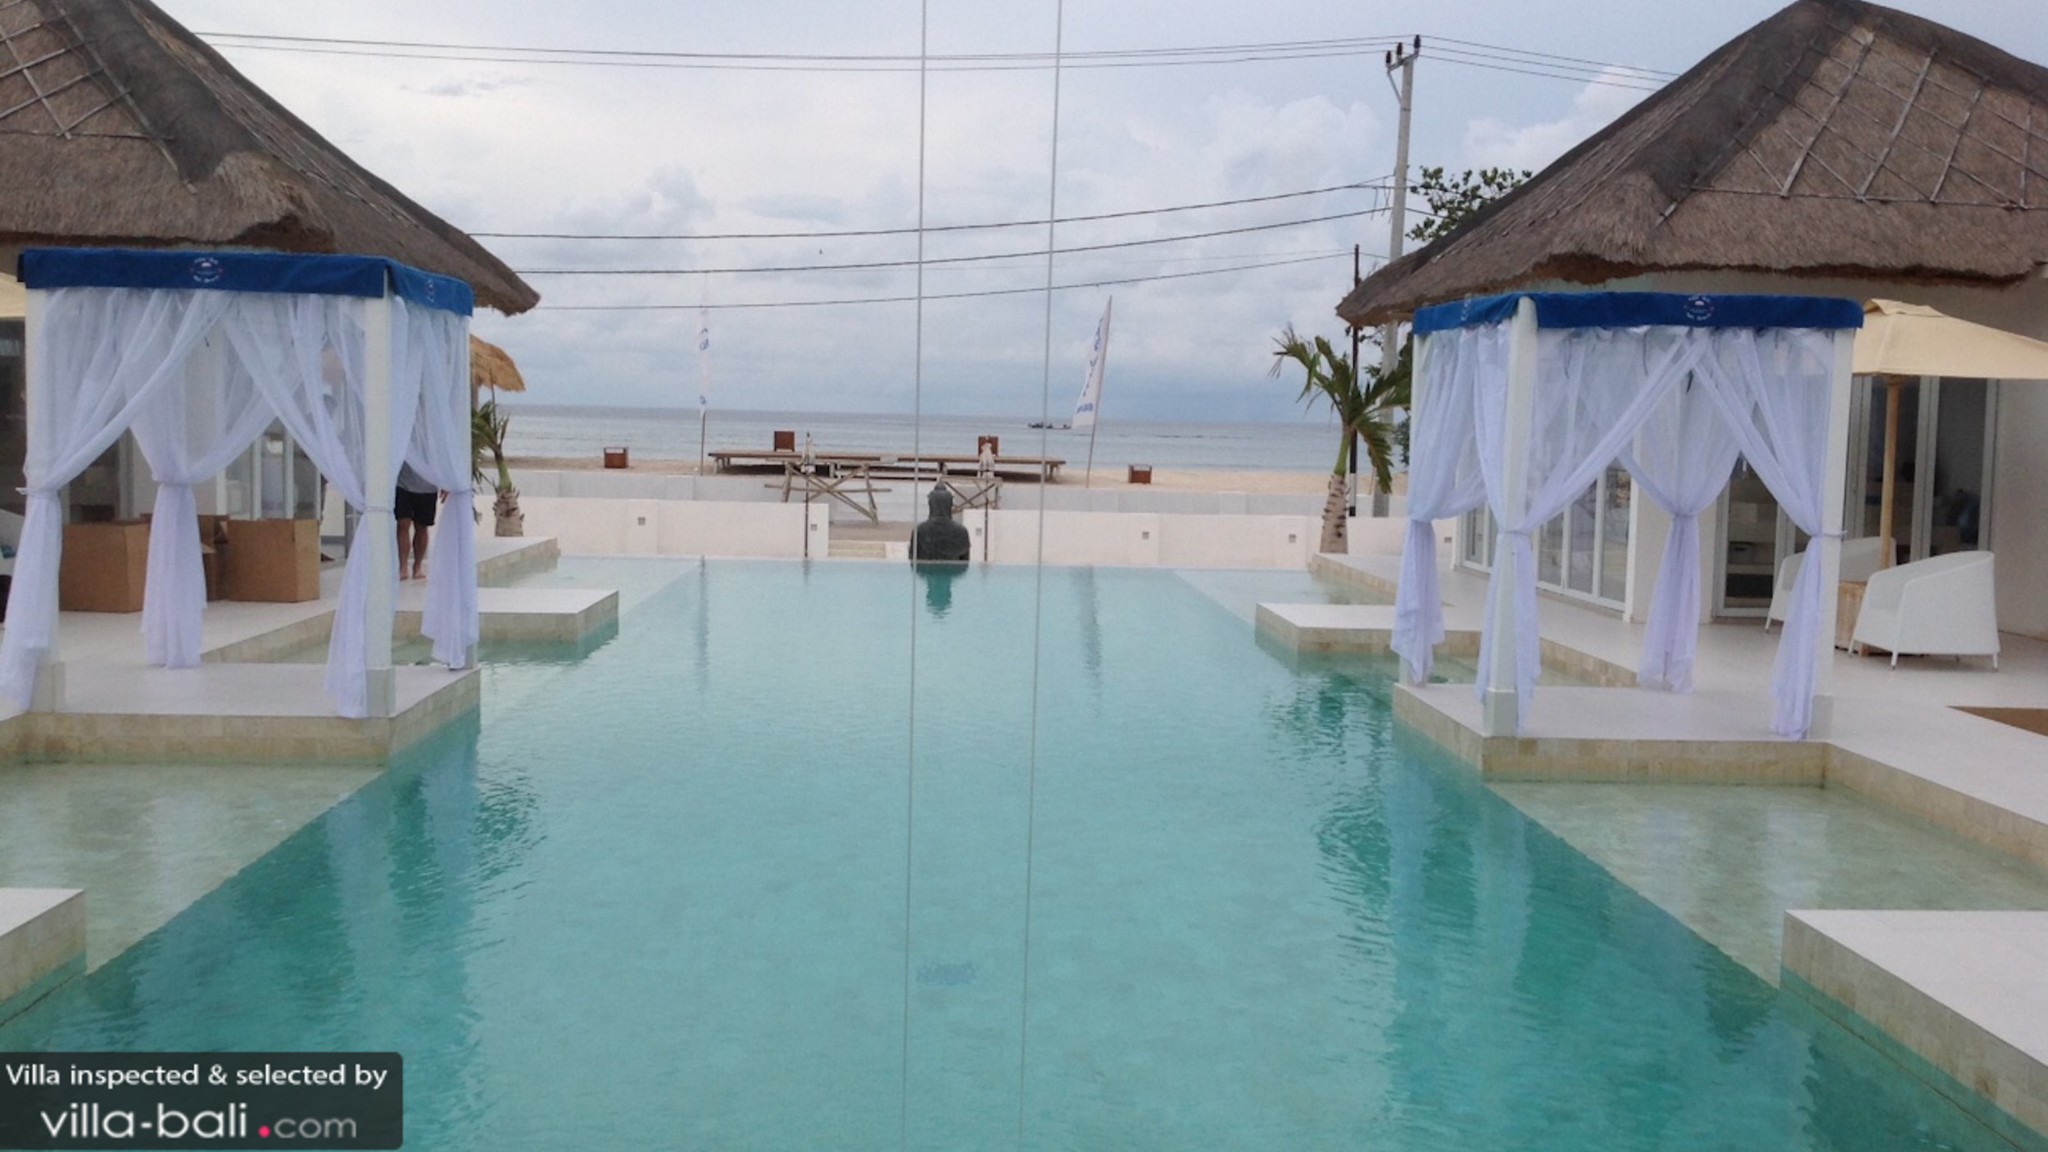 Villa Gili Bali Beach in Gili islands, Bali (5 bedrooms) - Best Price